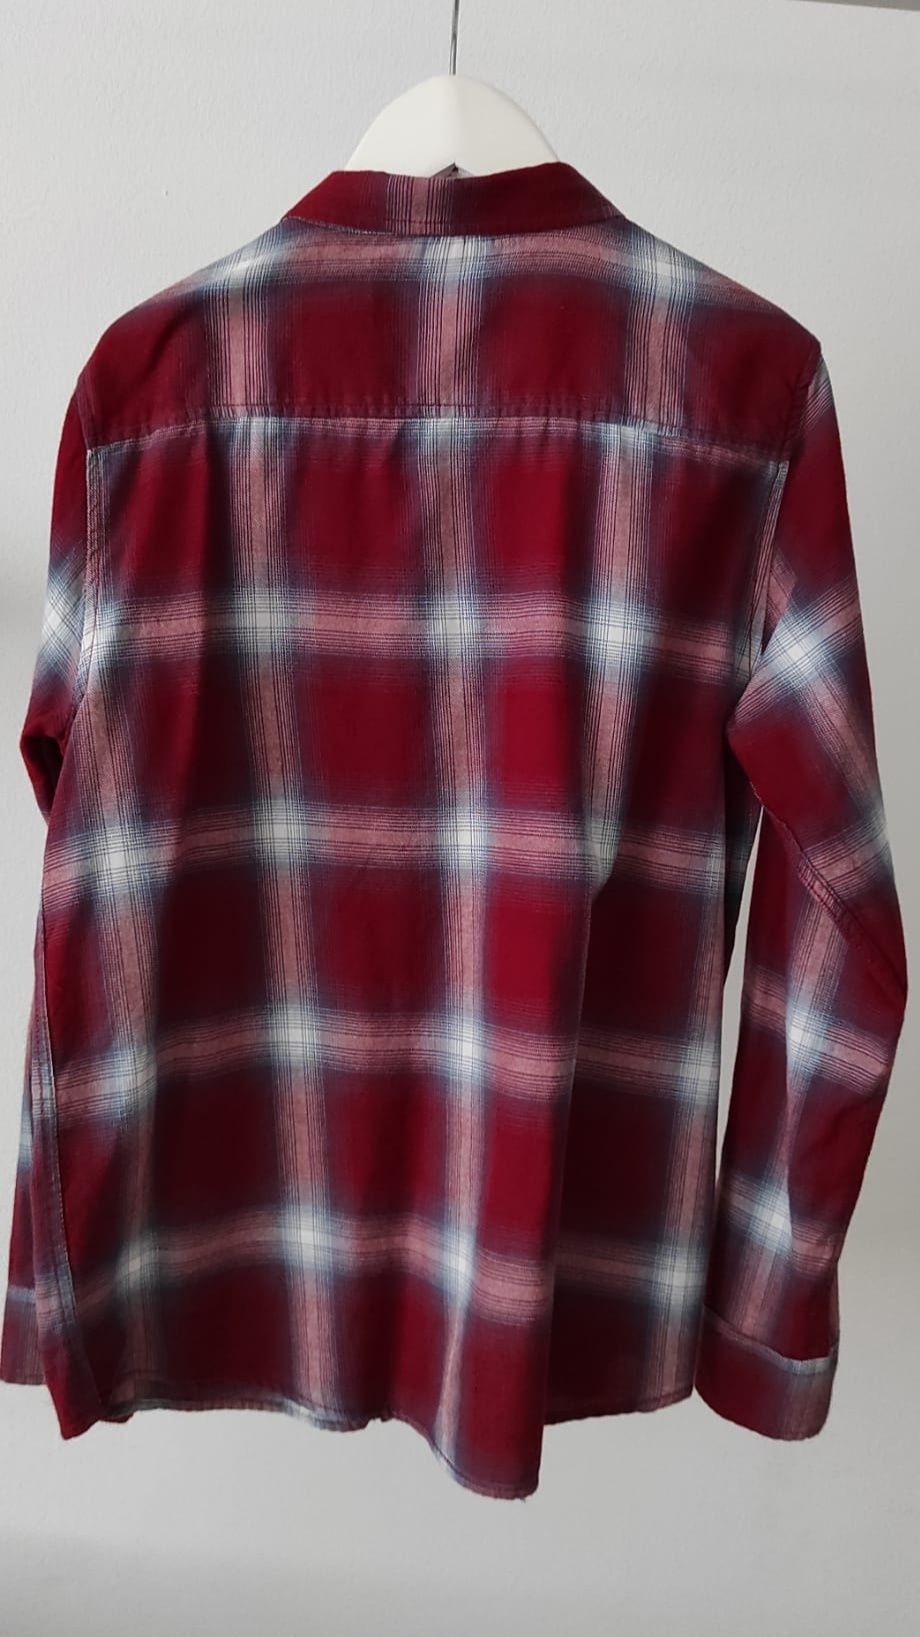 Camisa Zara xadrez 100% algodão, menino 10A.